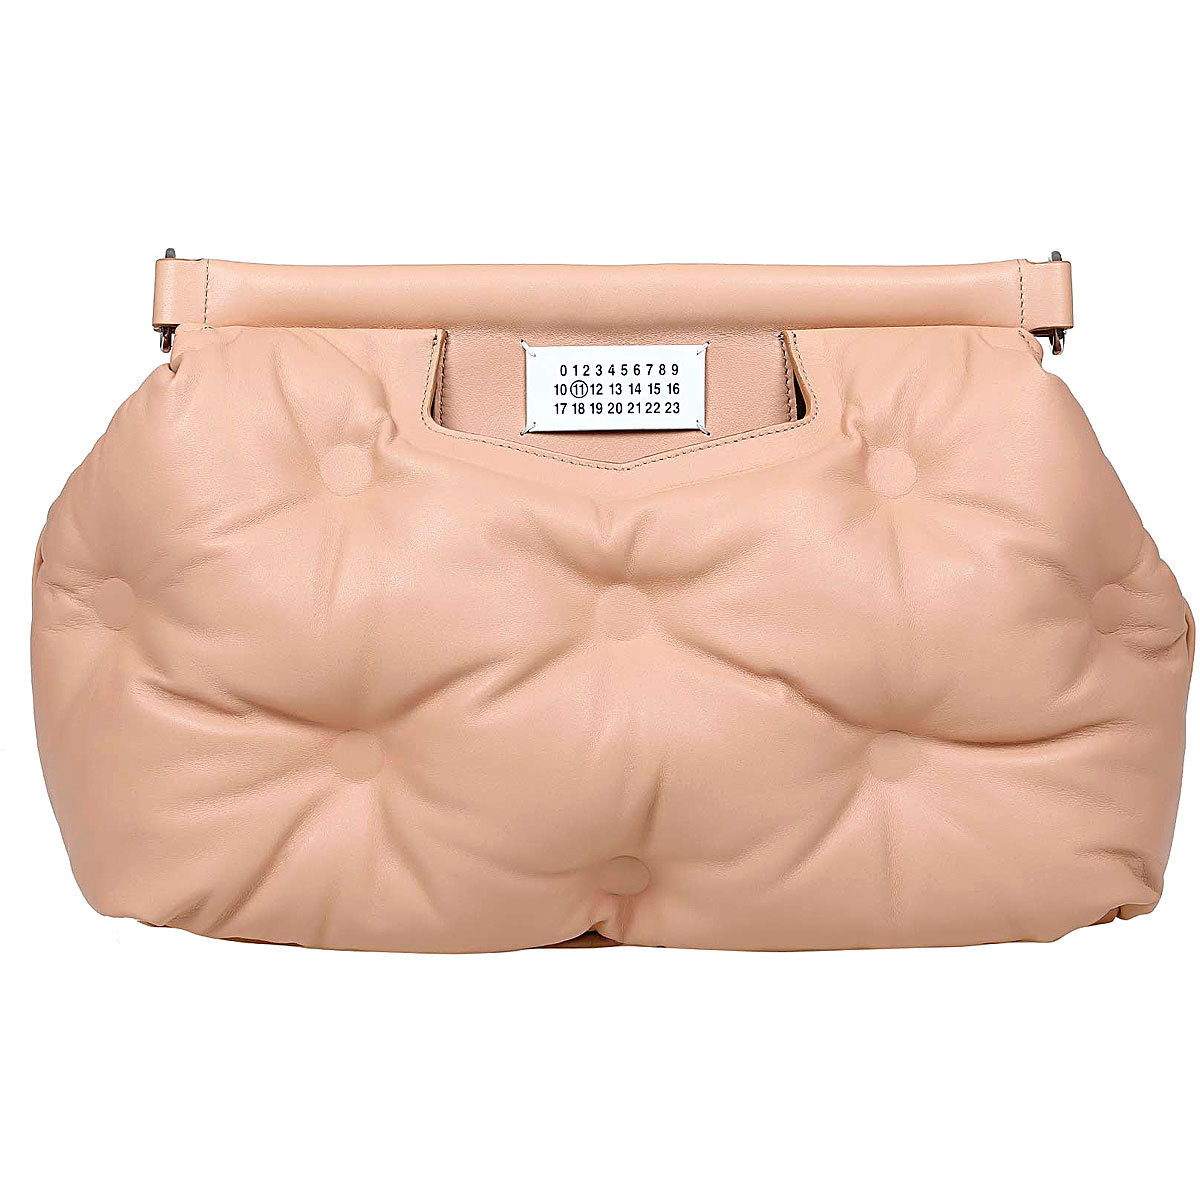 Handbags Maison Margiela, Style code: s56wg0177-p4300-t2057